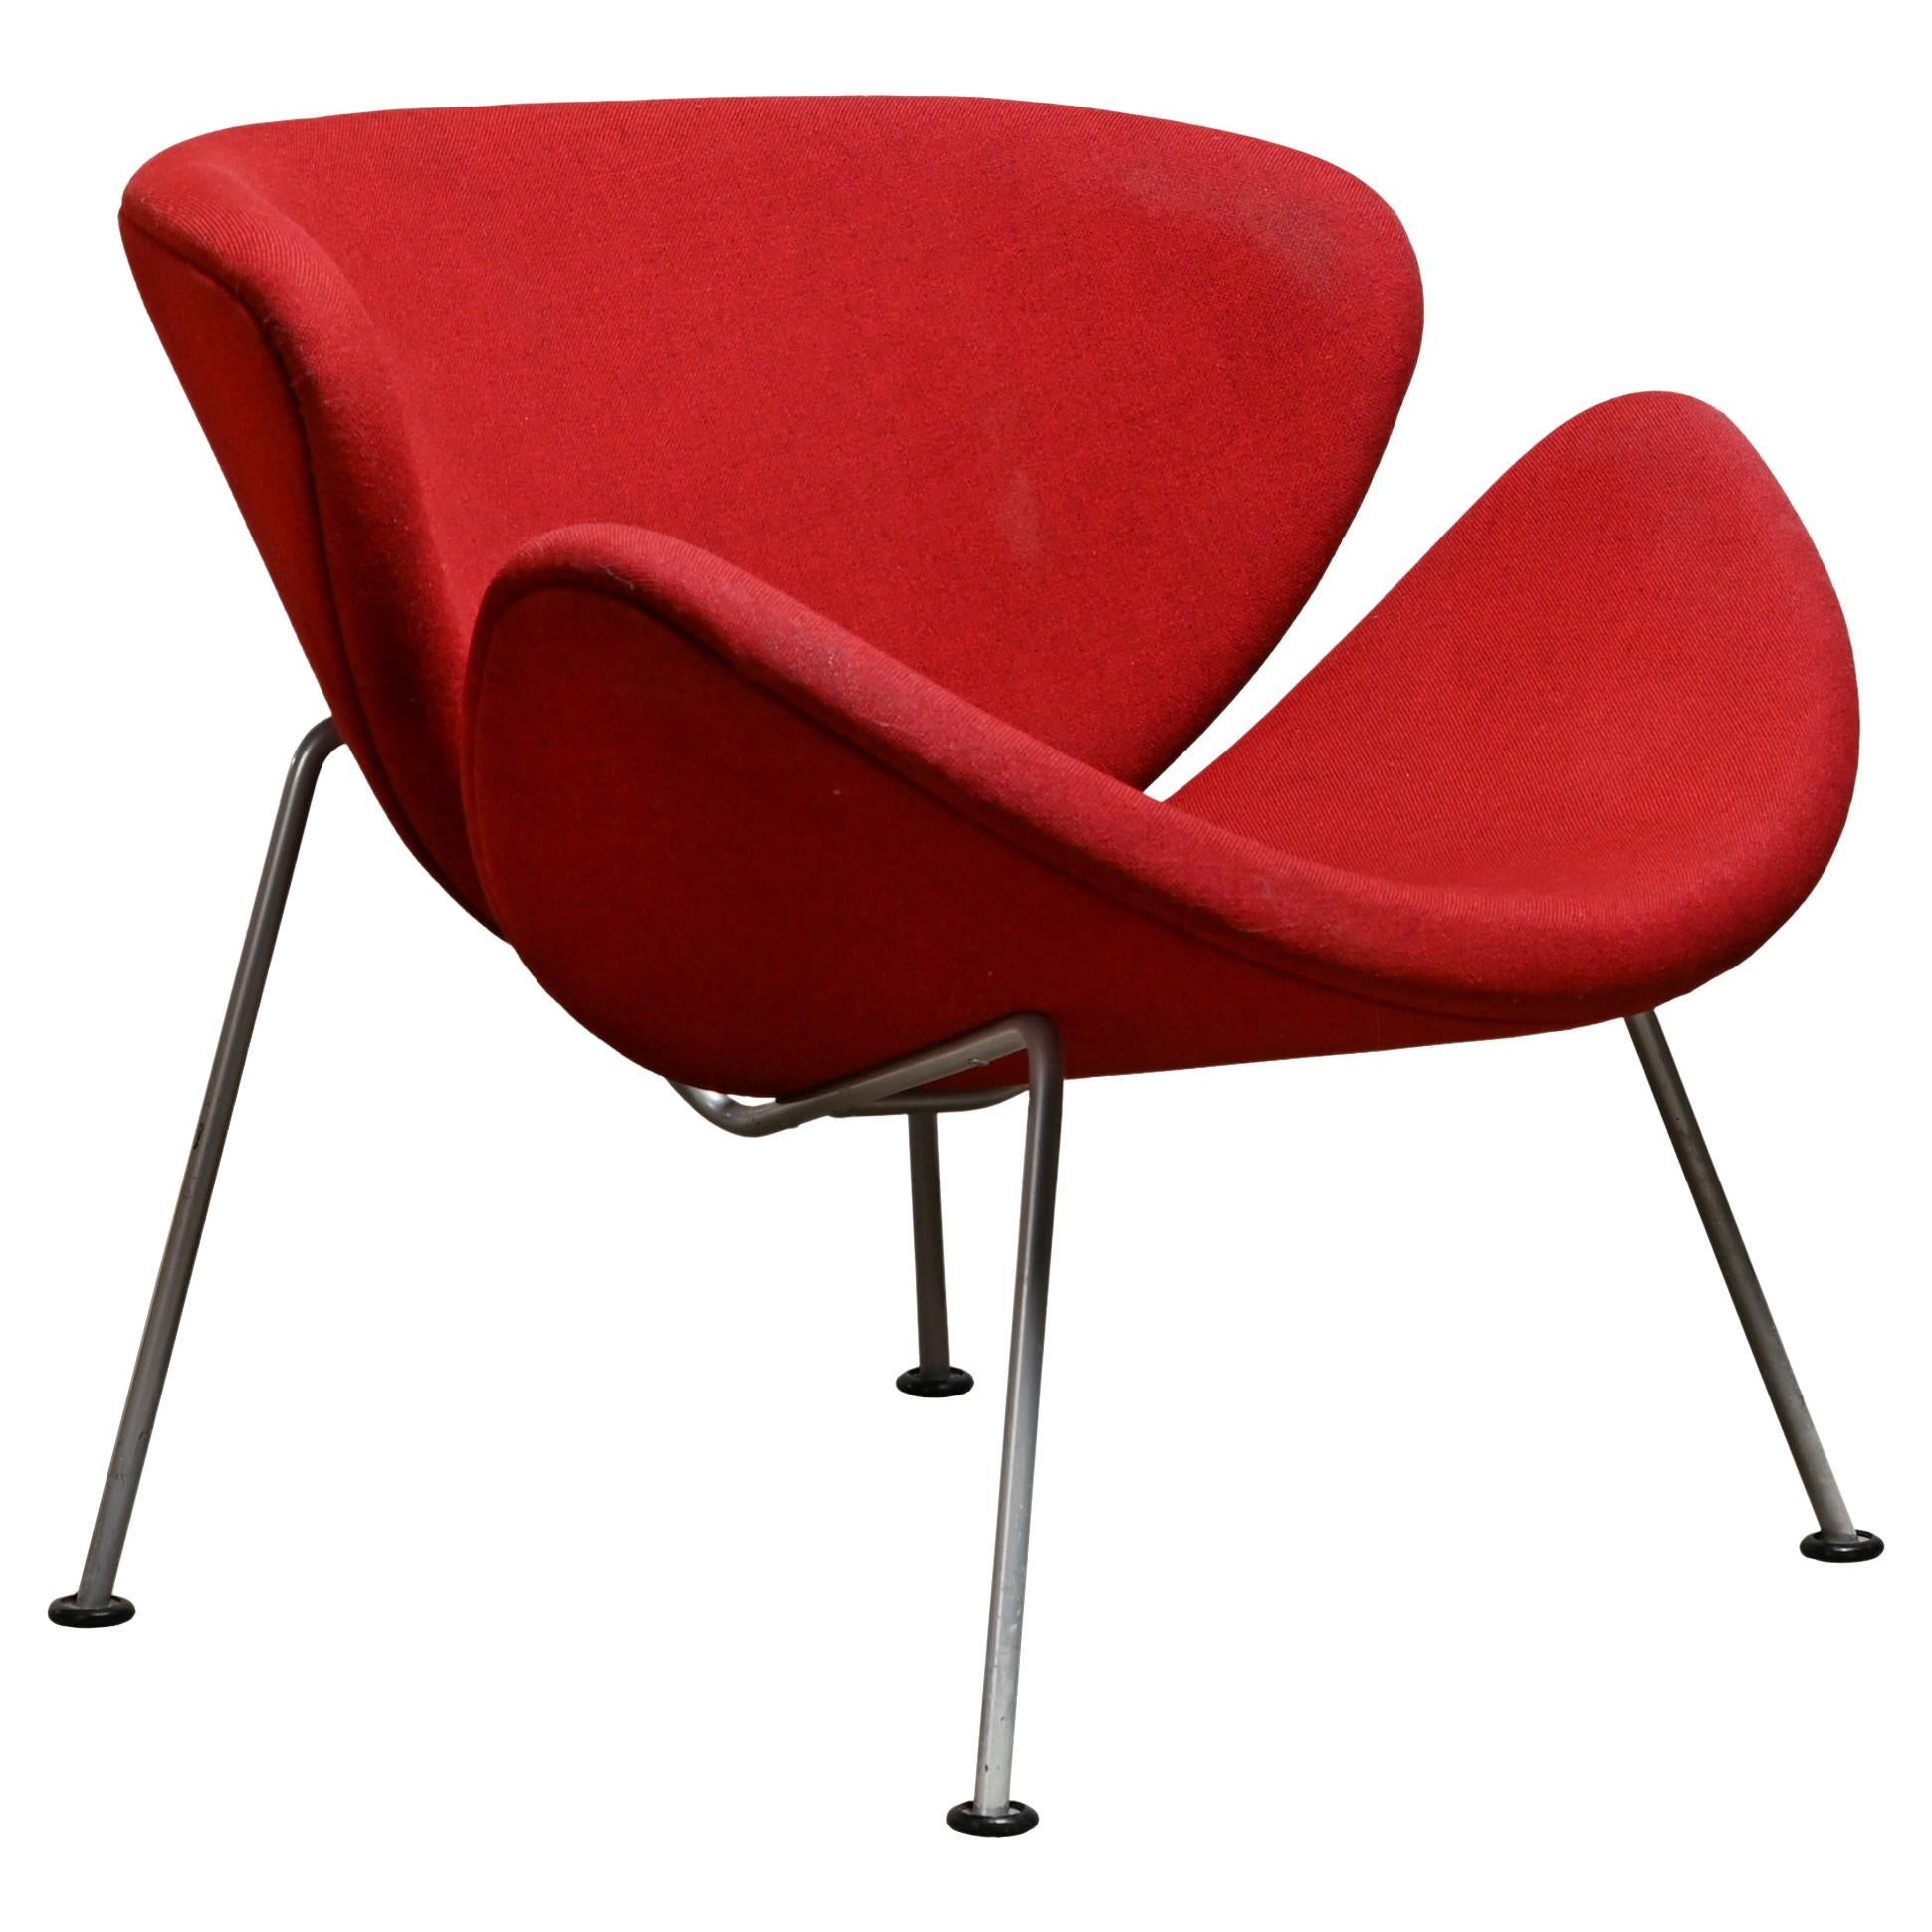 Early Pierre Paulin 'Orange Slice' Chair in Red Fabric by Artifort, Netherlands